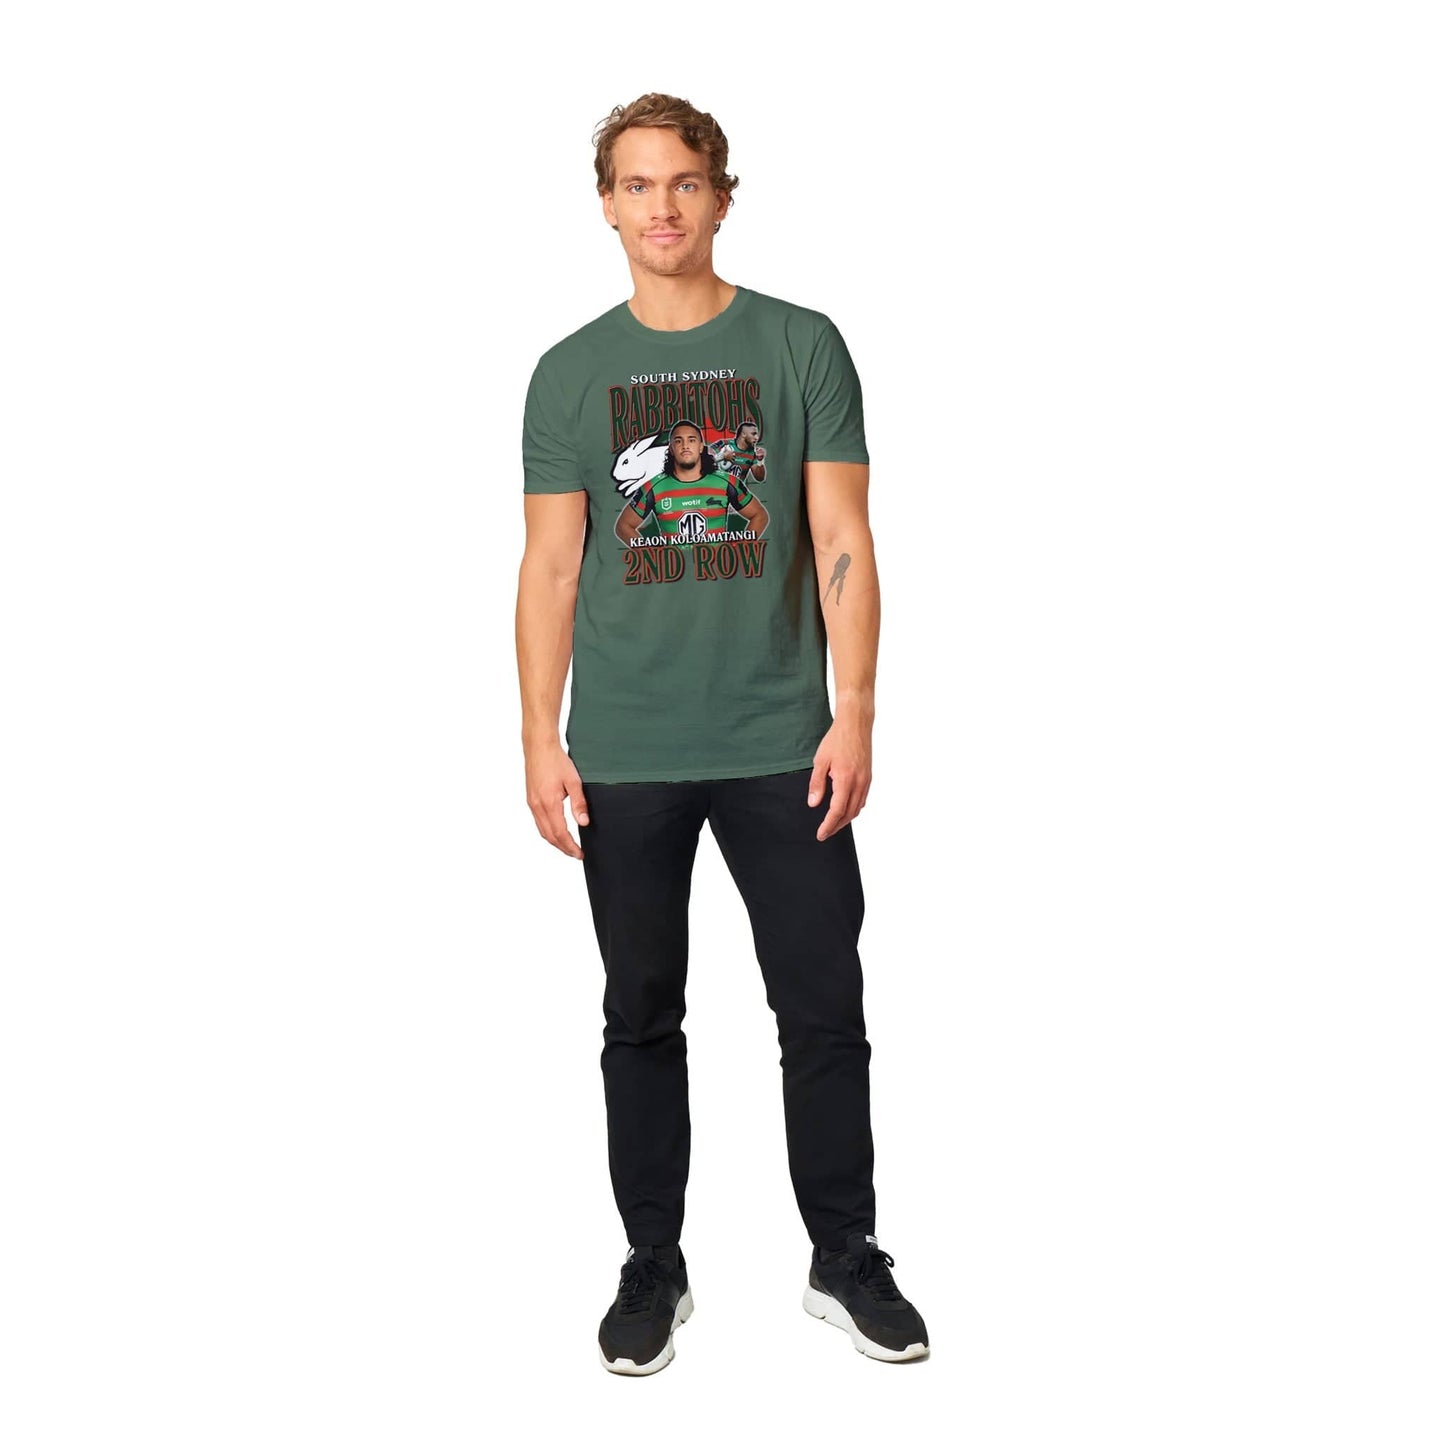 keaon koloamatangi T-shirt Australia Online Color